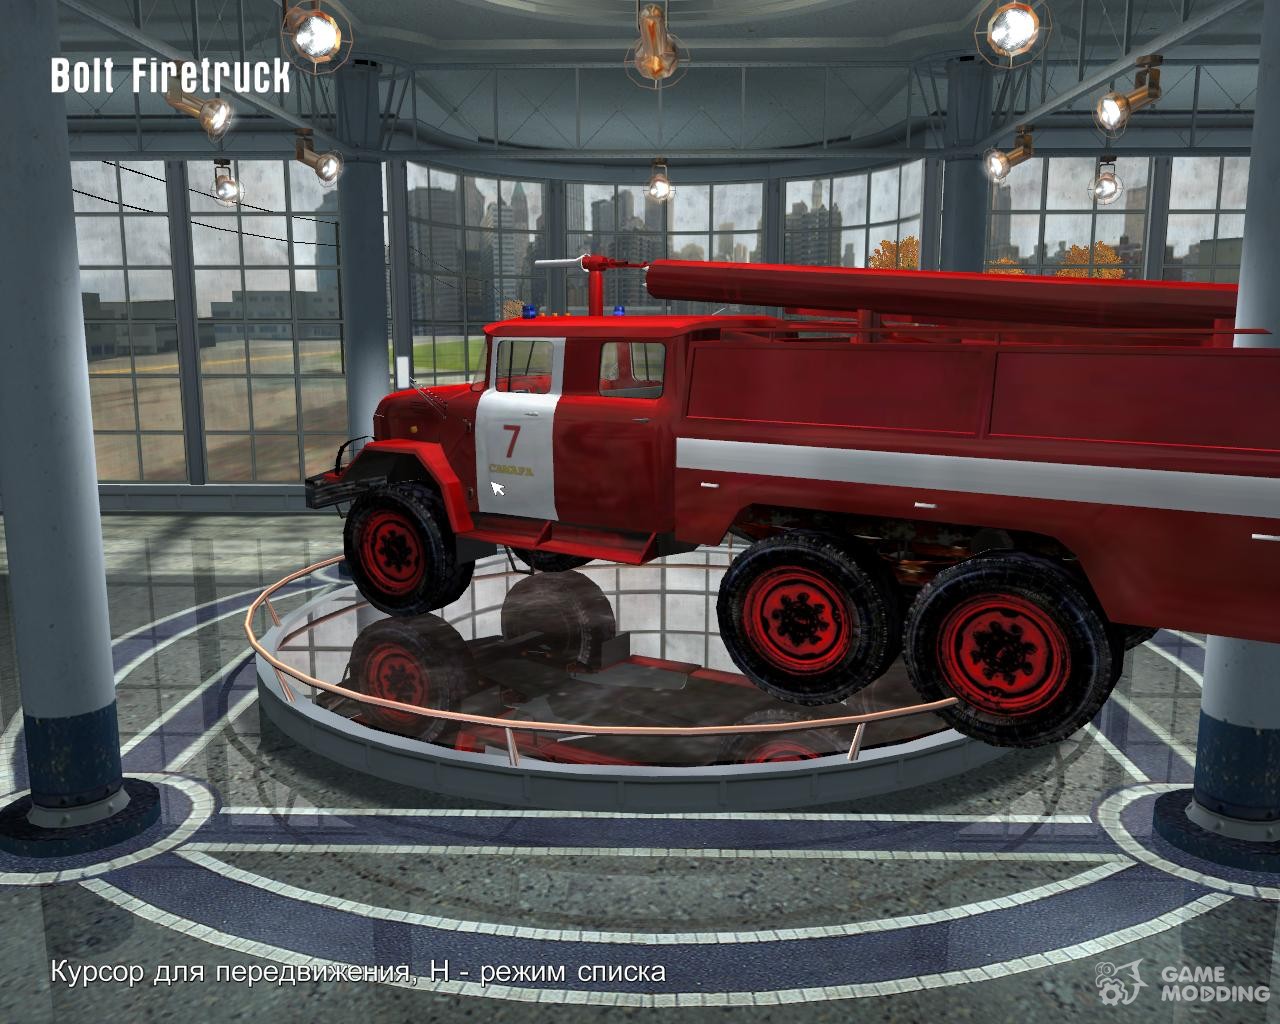 ZIL 131 fire truck for Mafia: The City of Lost Heaven